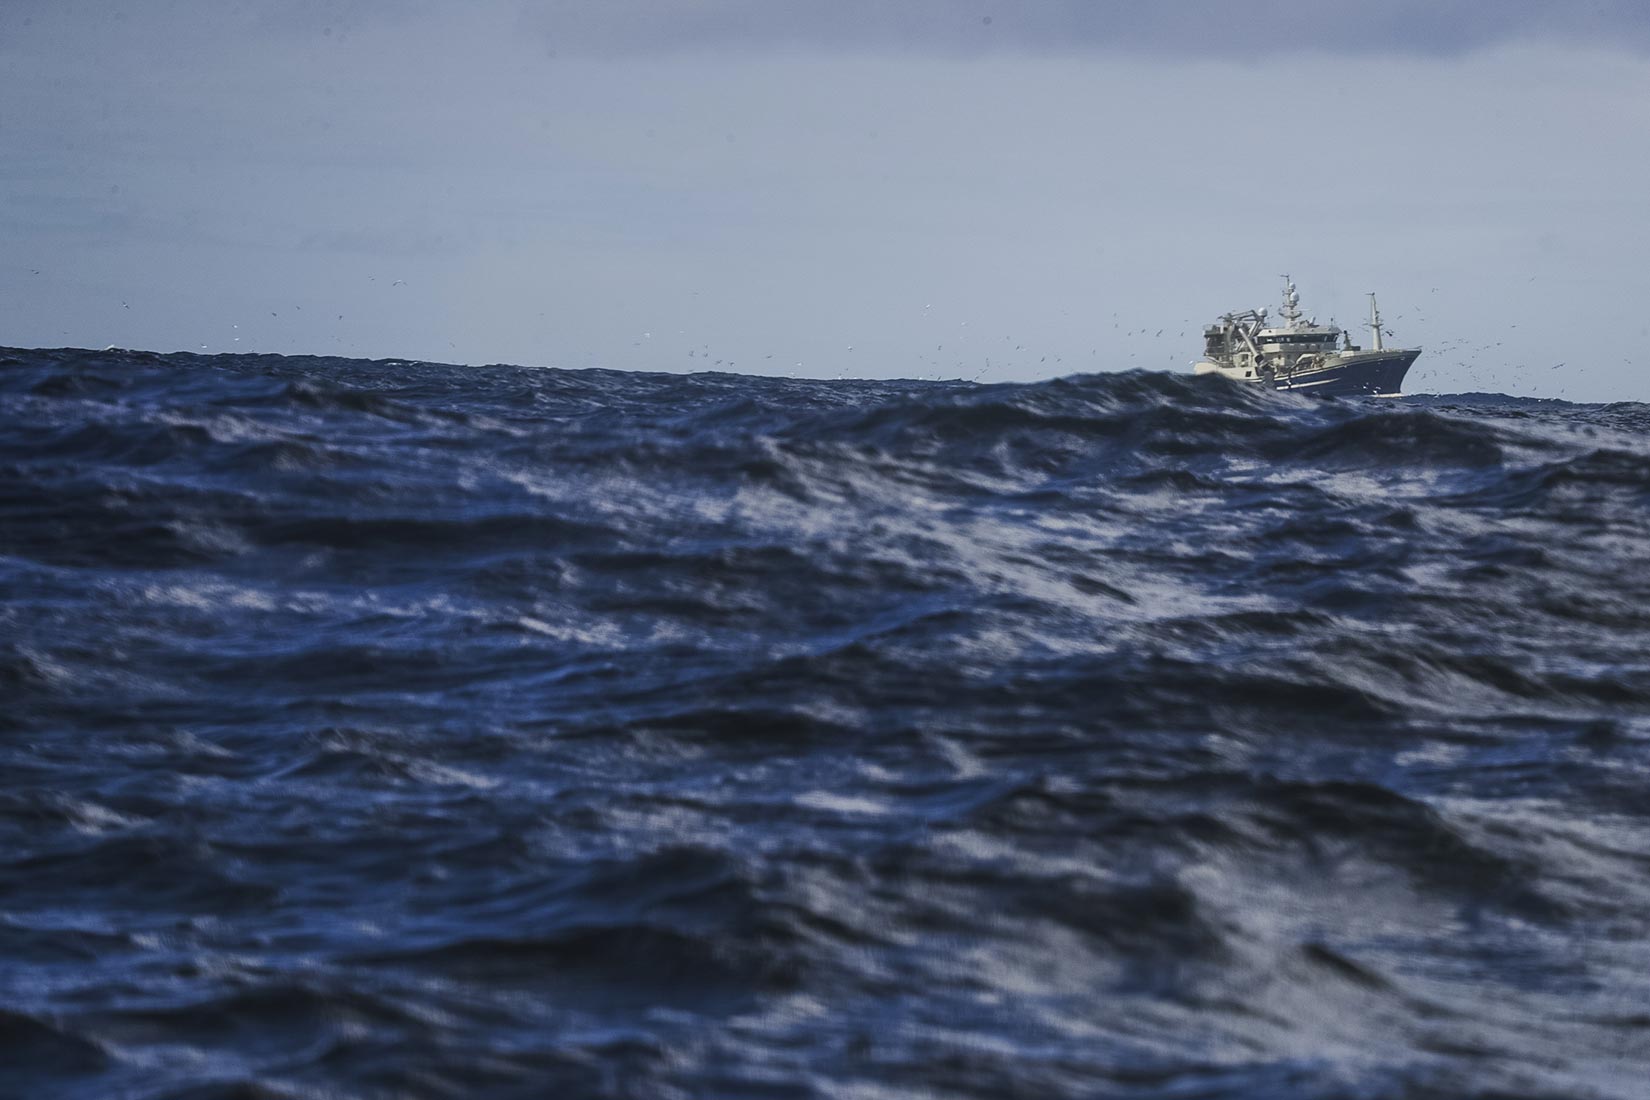 EEZに居座る中国漁船群にフィリピンはどう対応すべきか？